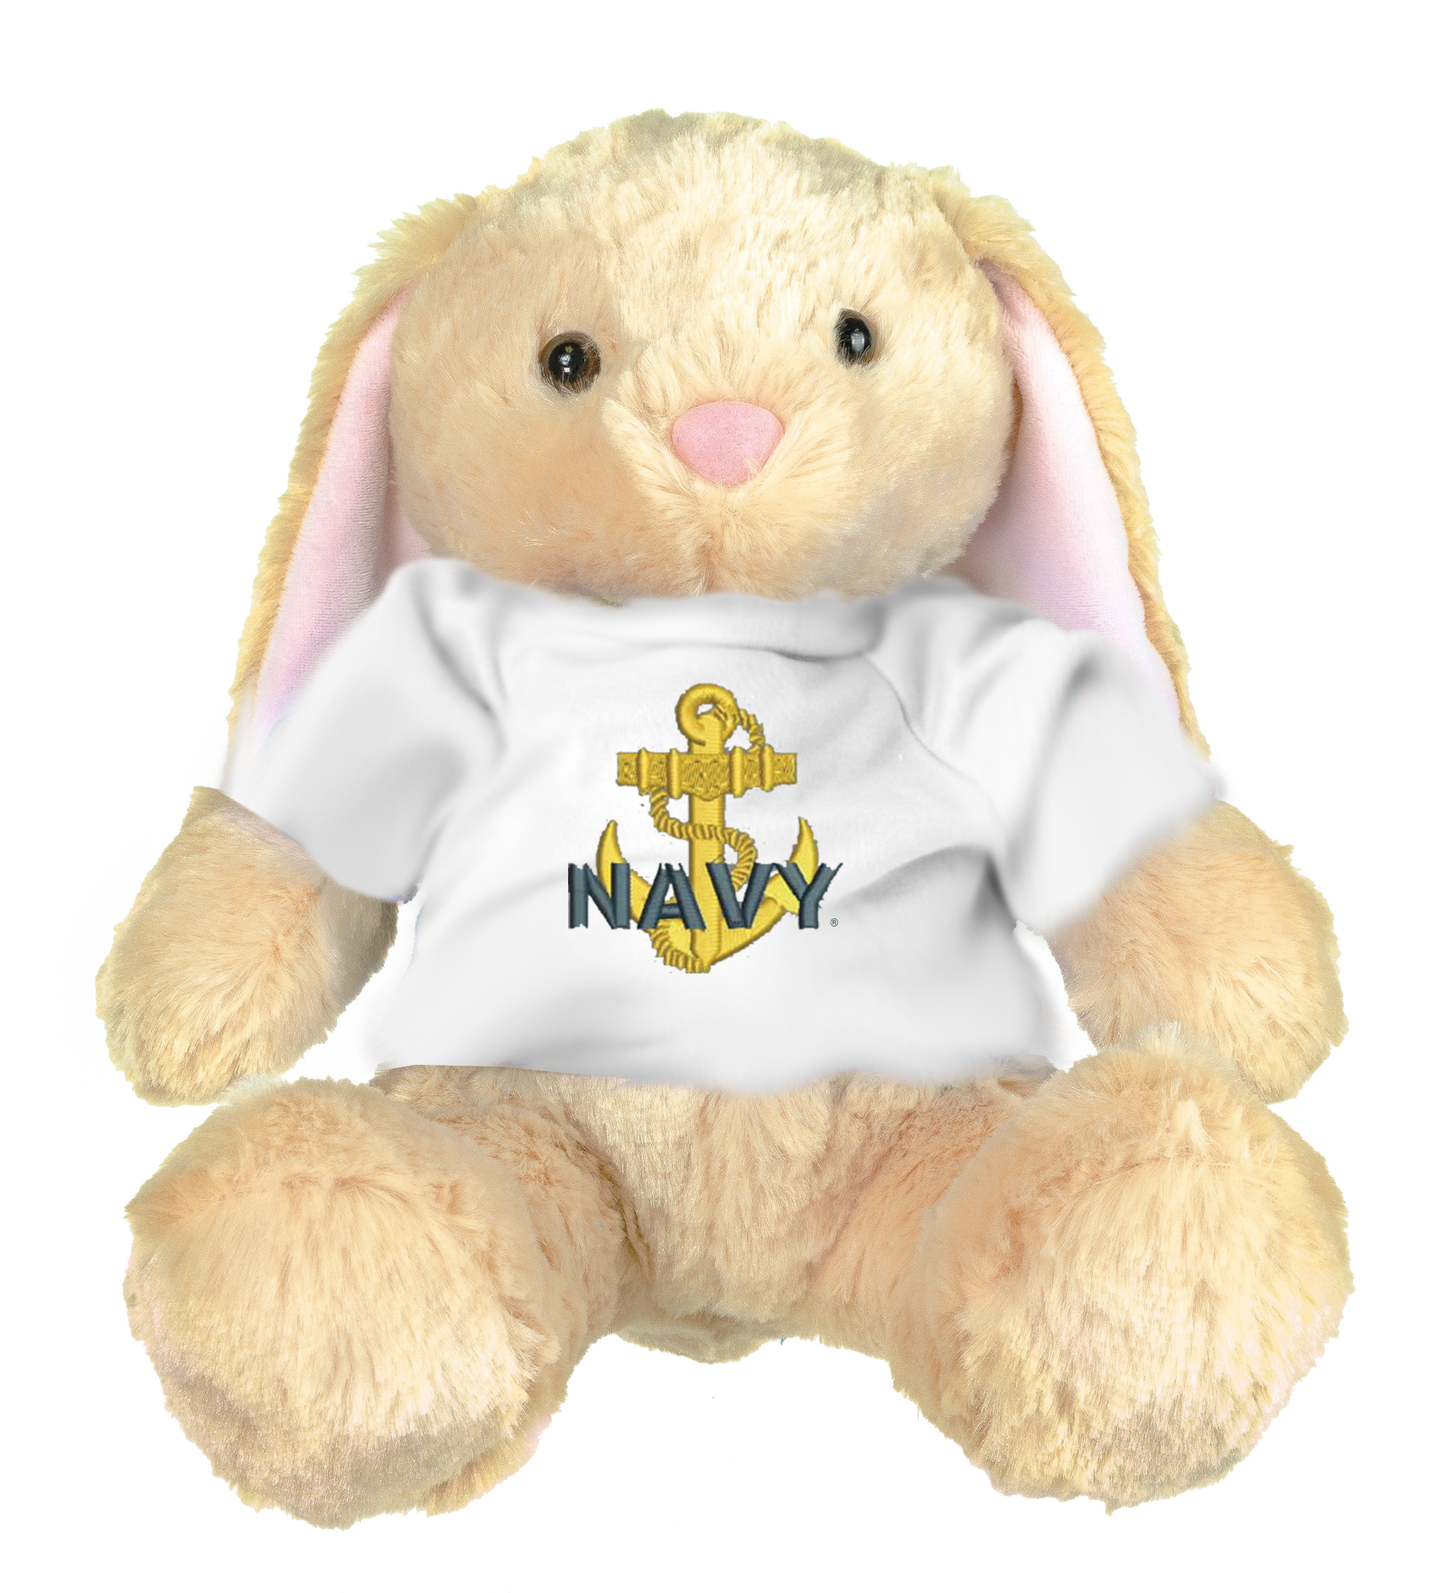 U.S. Navy on Stuffed Plush Bunny Rabbit